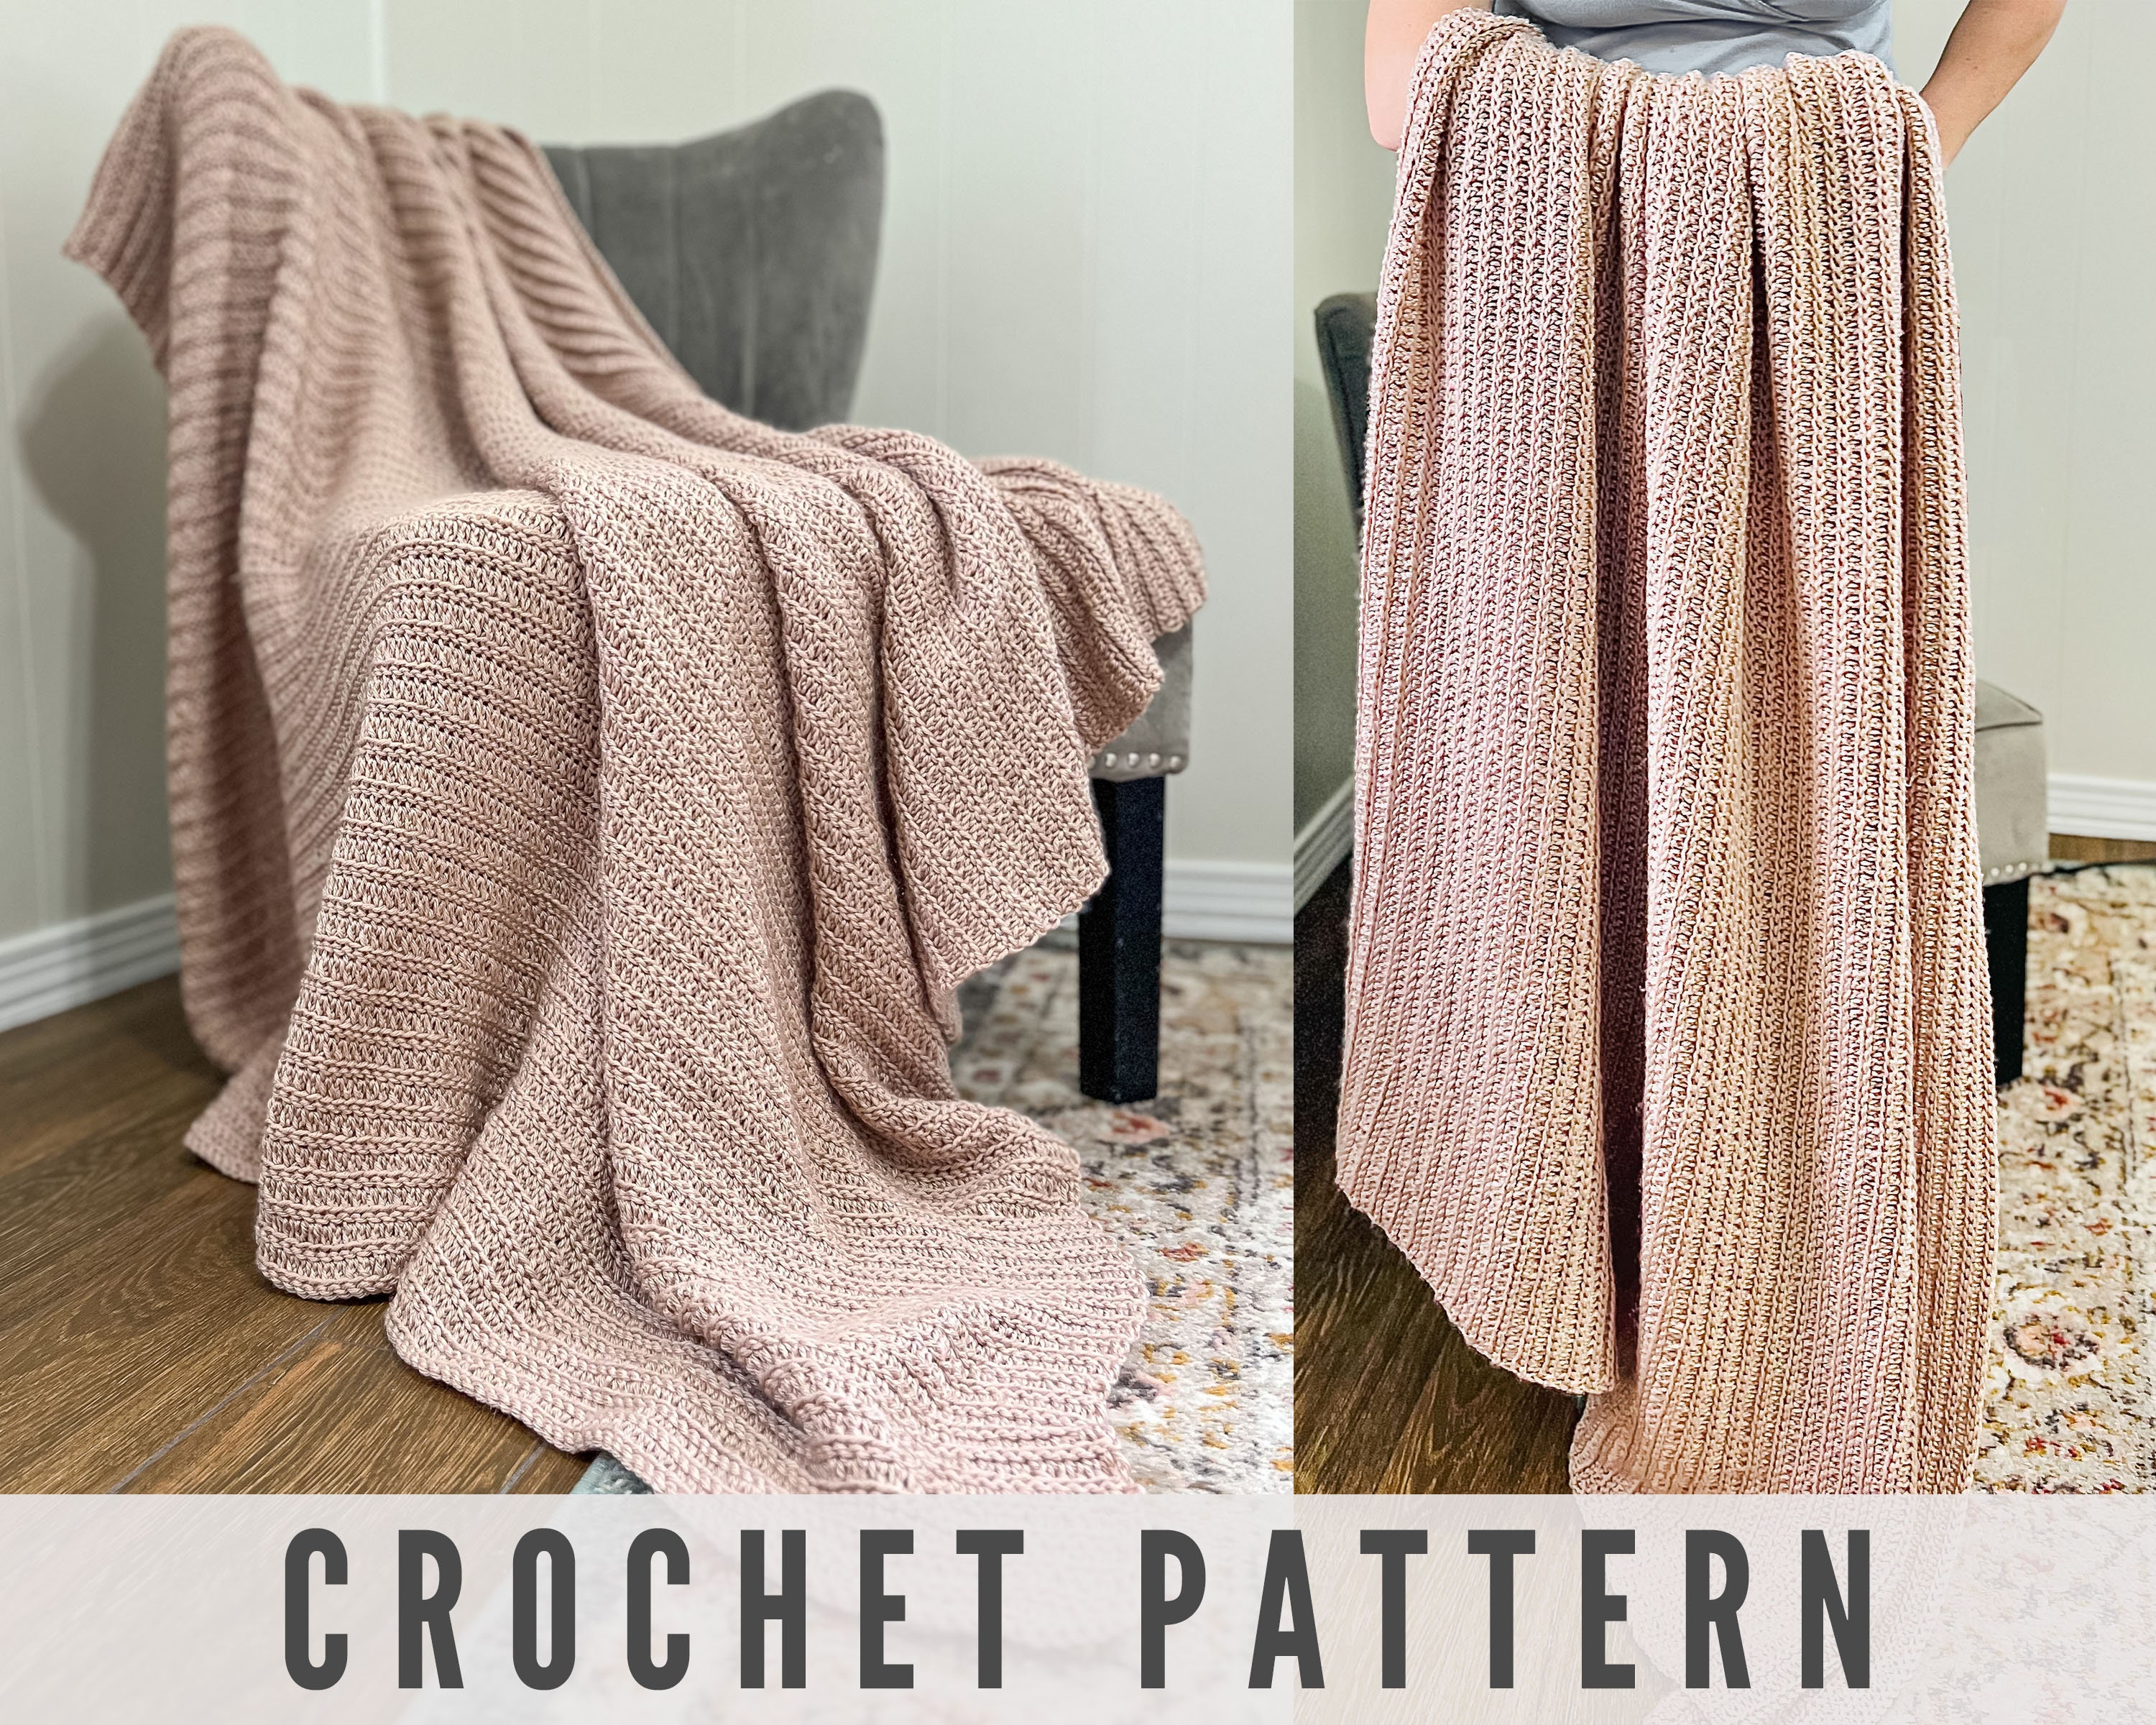 CROCHET PATTERN Knit Look Crochet Blanket Afghan Throw in image